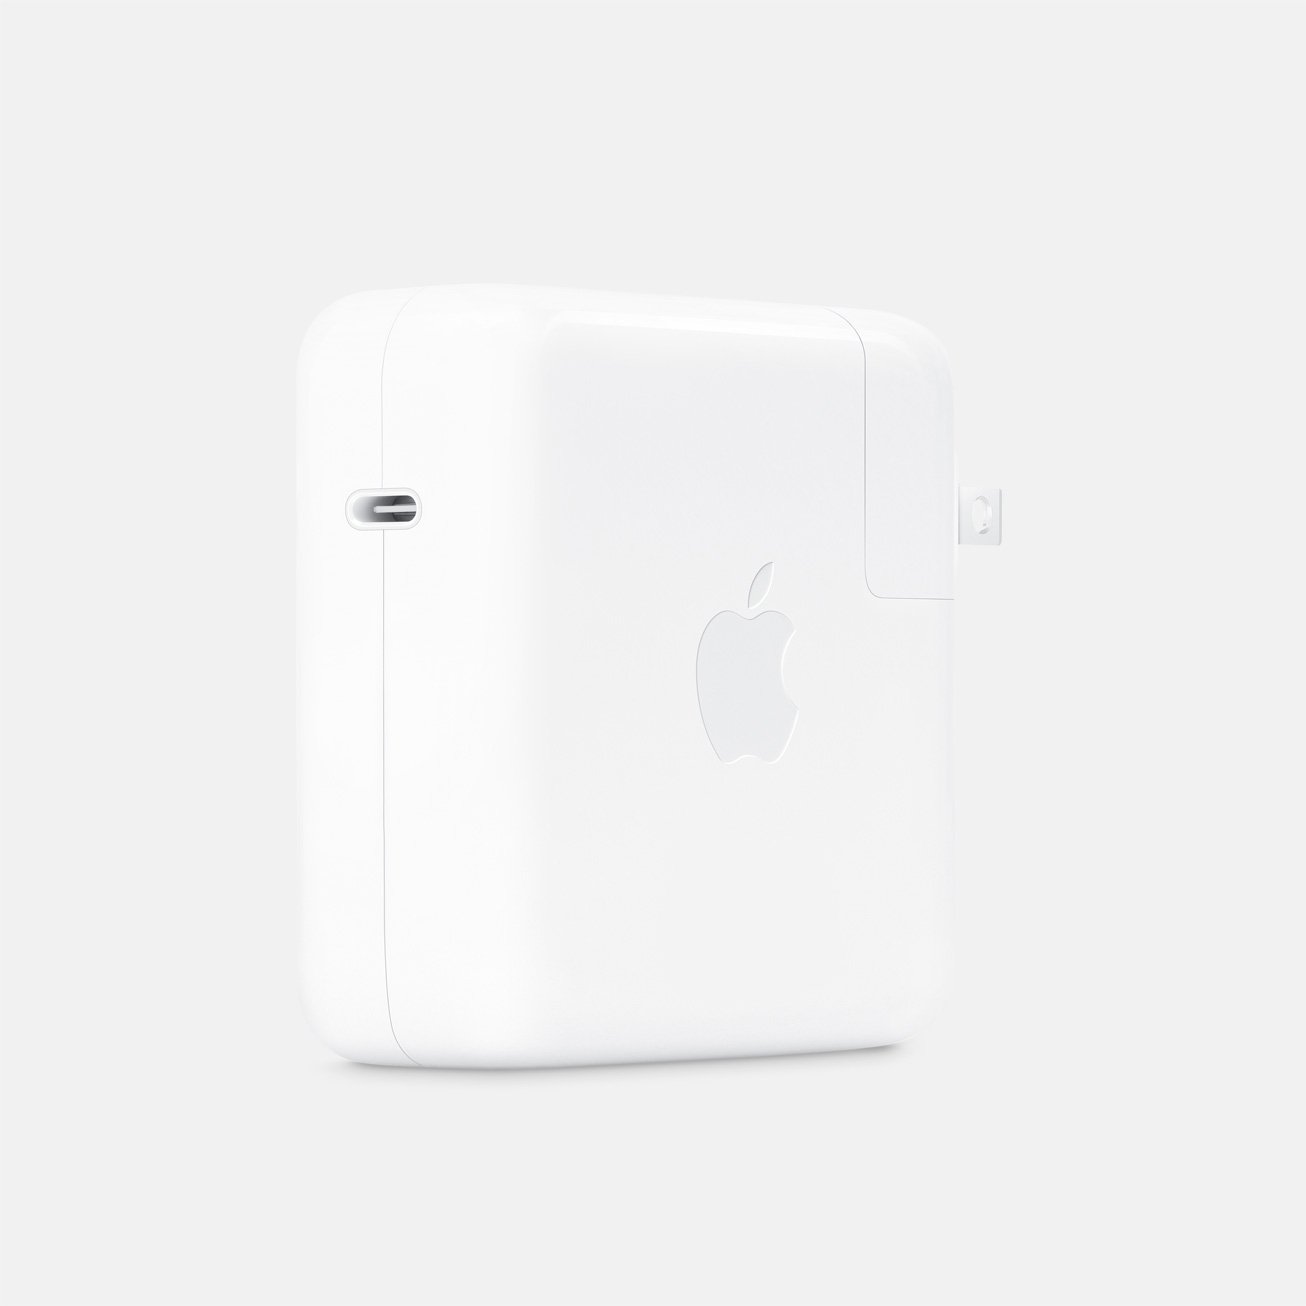 Apple-WWDC22-67W-dual-USB-C-Power-Adapter-220606.jpg